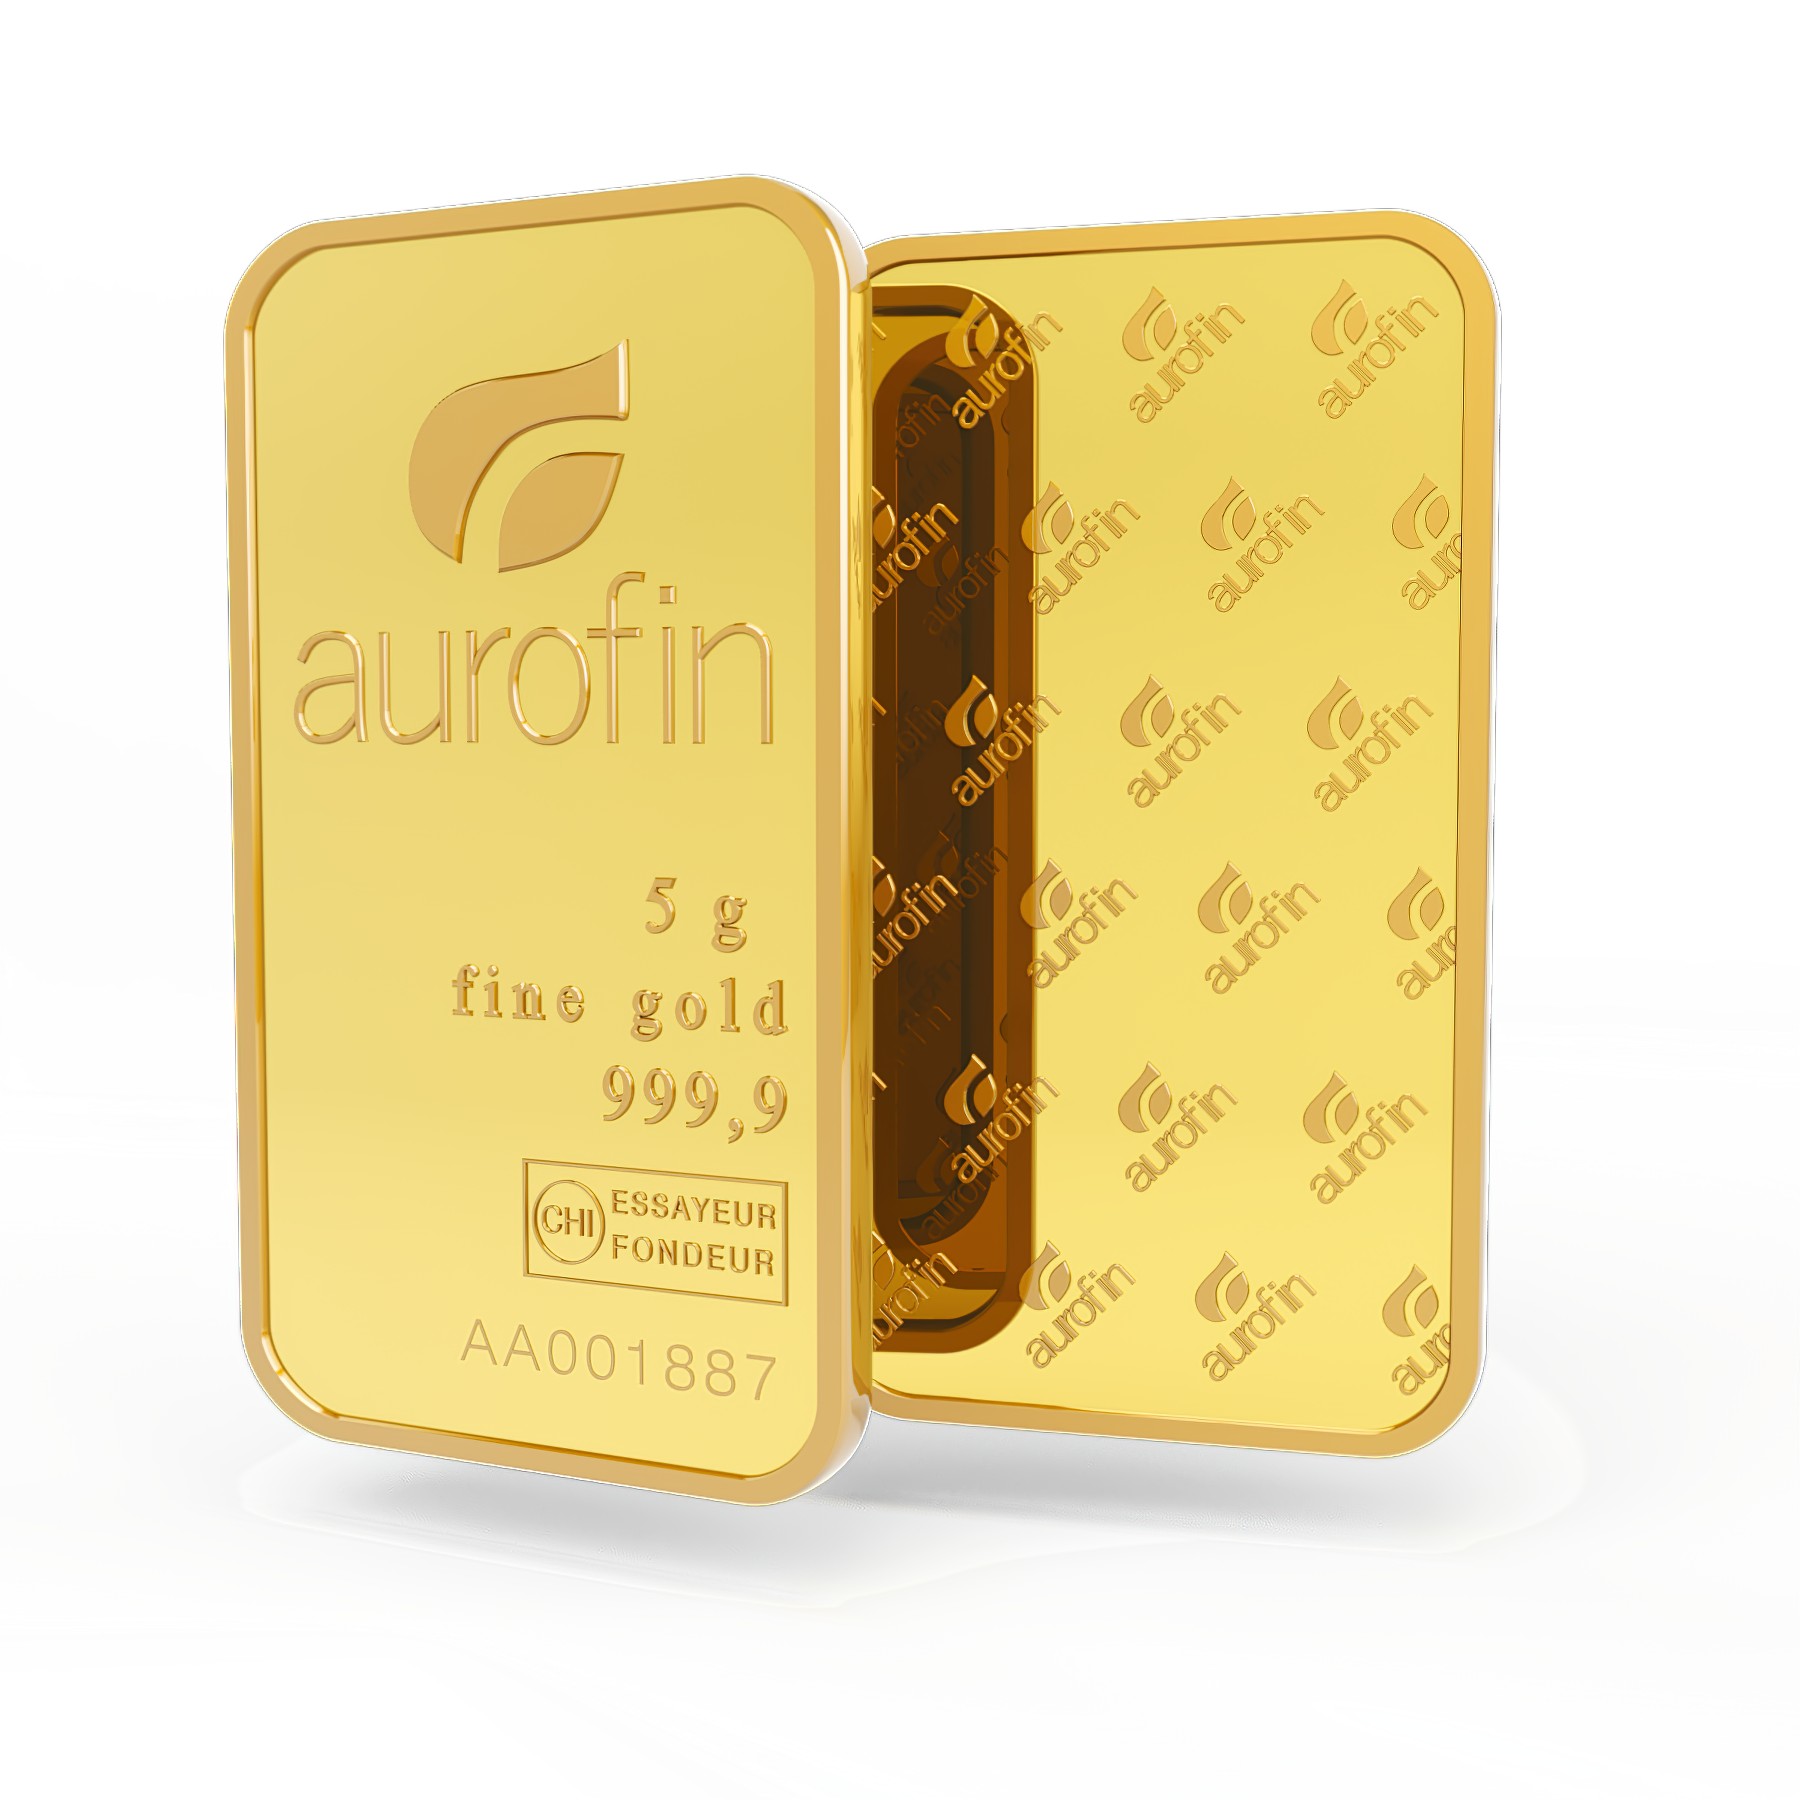 Lingou aur 5g, Elvetia, Fine Gold, 999,9